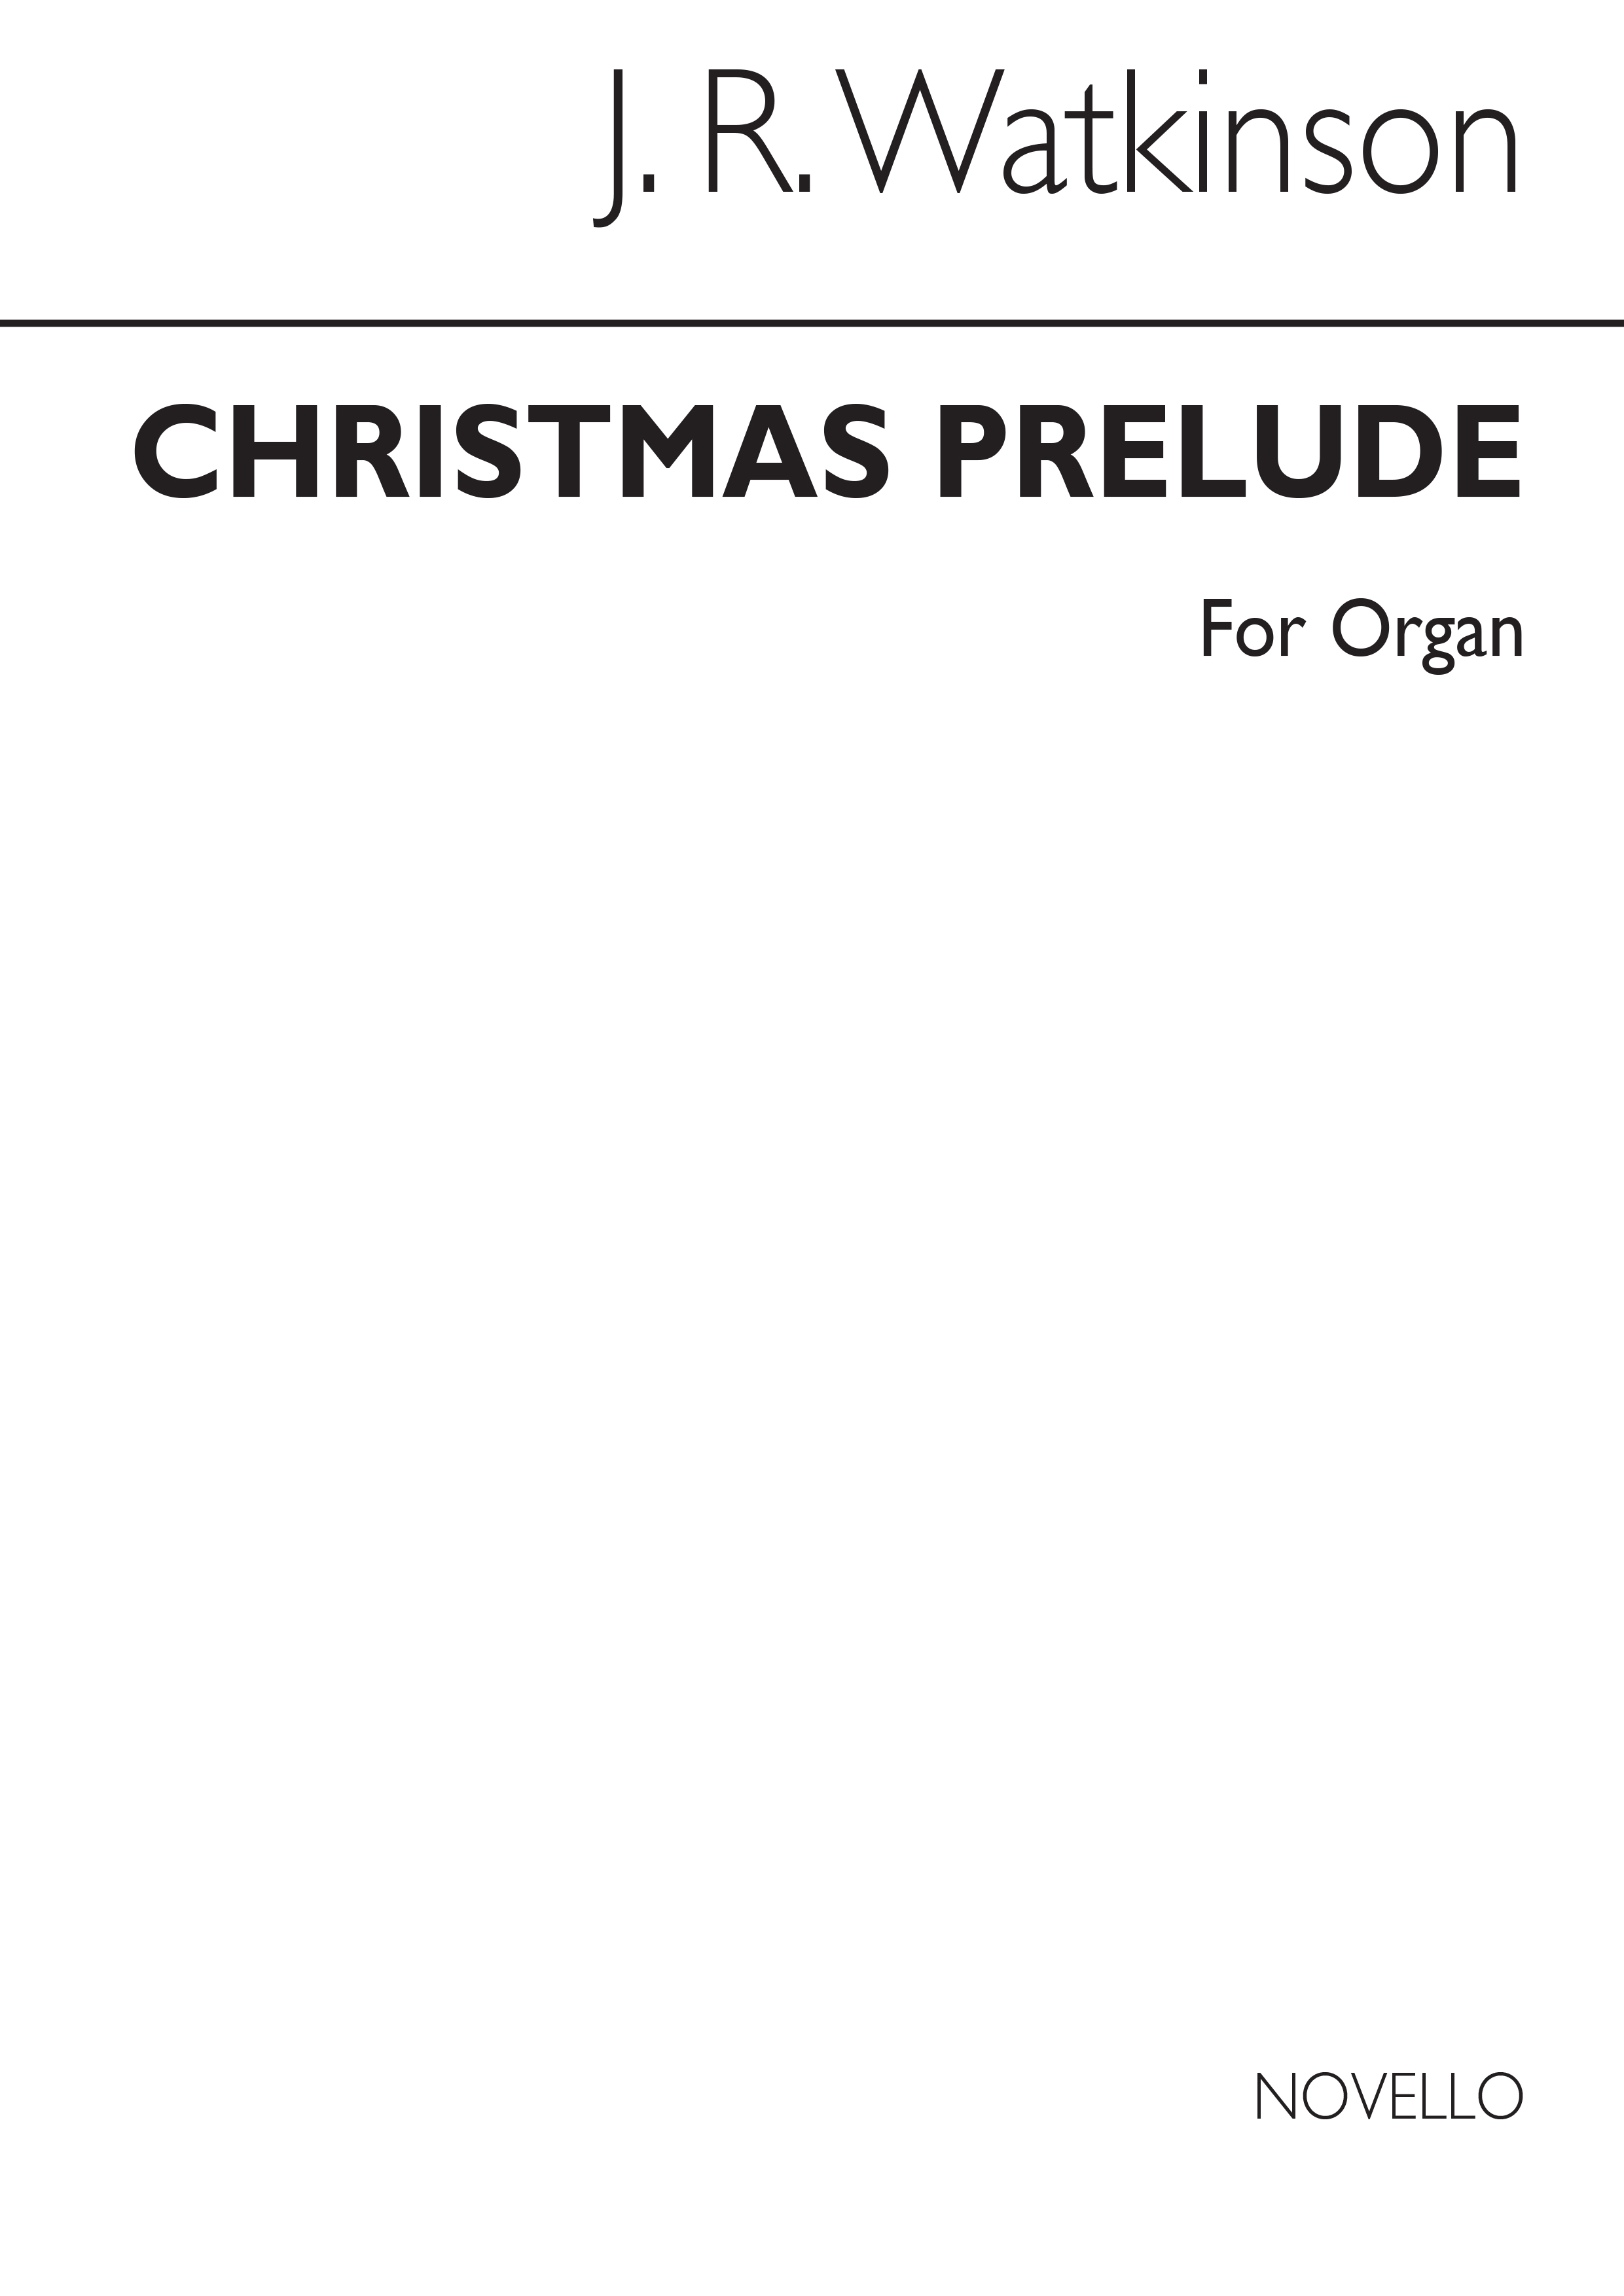 John Robert Watkinson: Christmas Prelude On Divinum Mysterium Organ